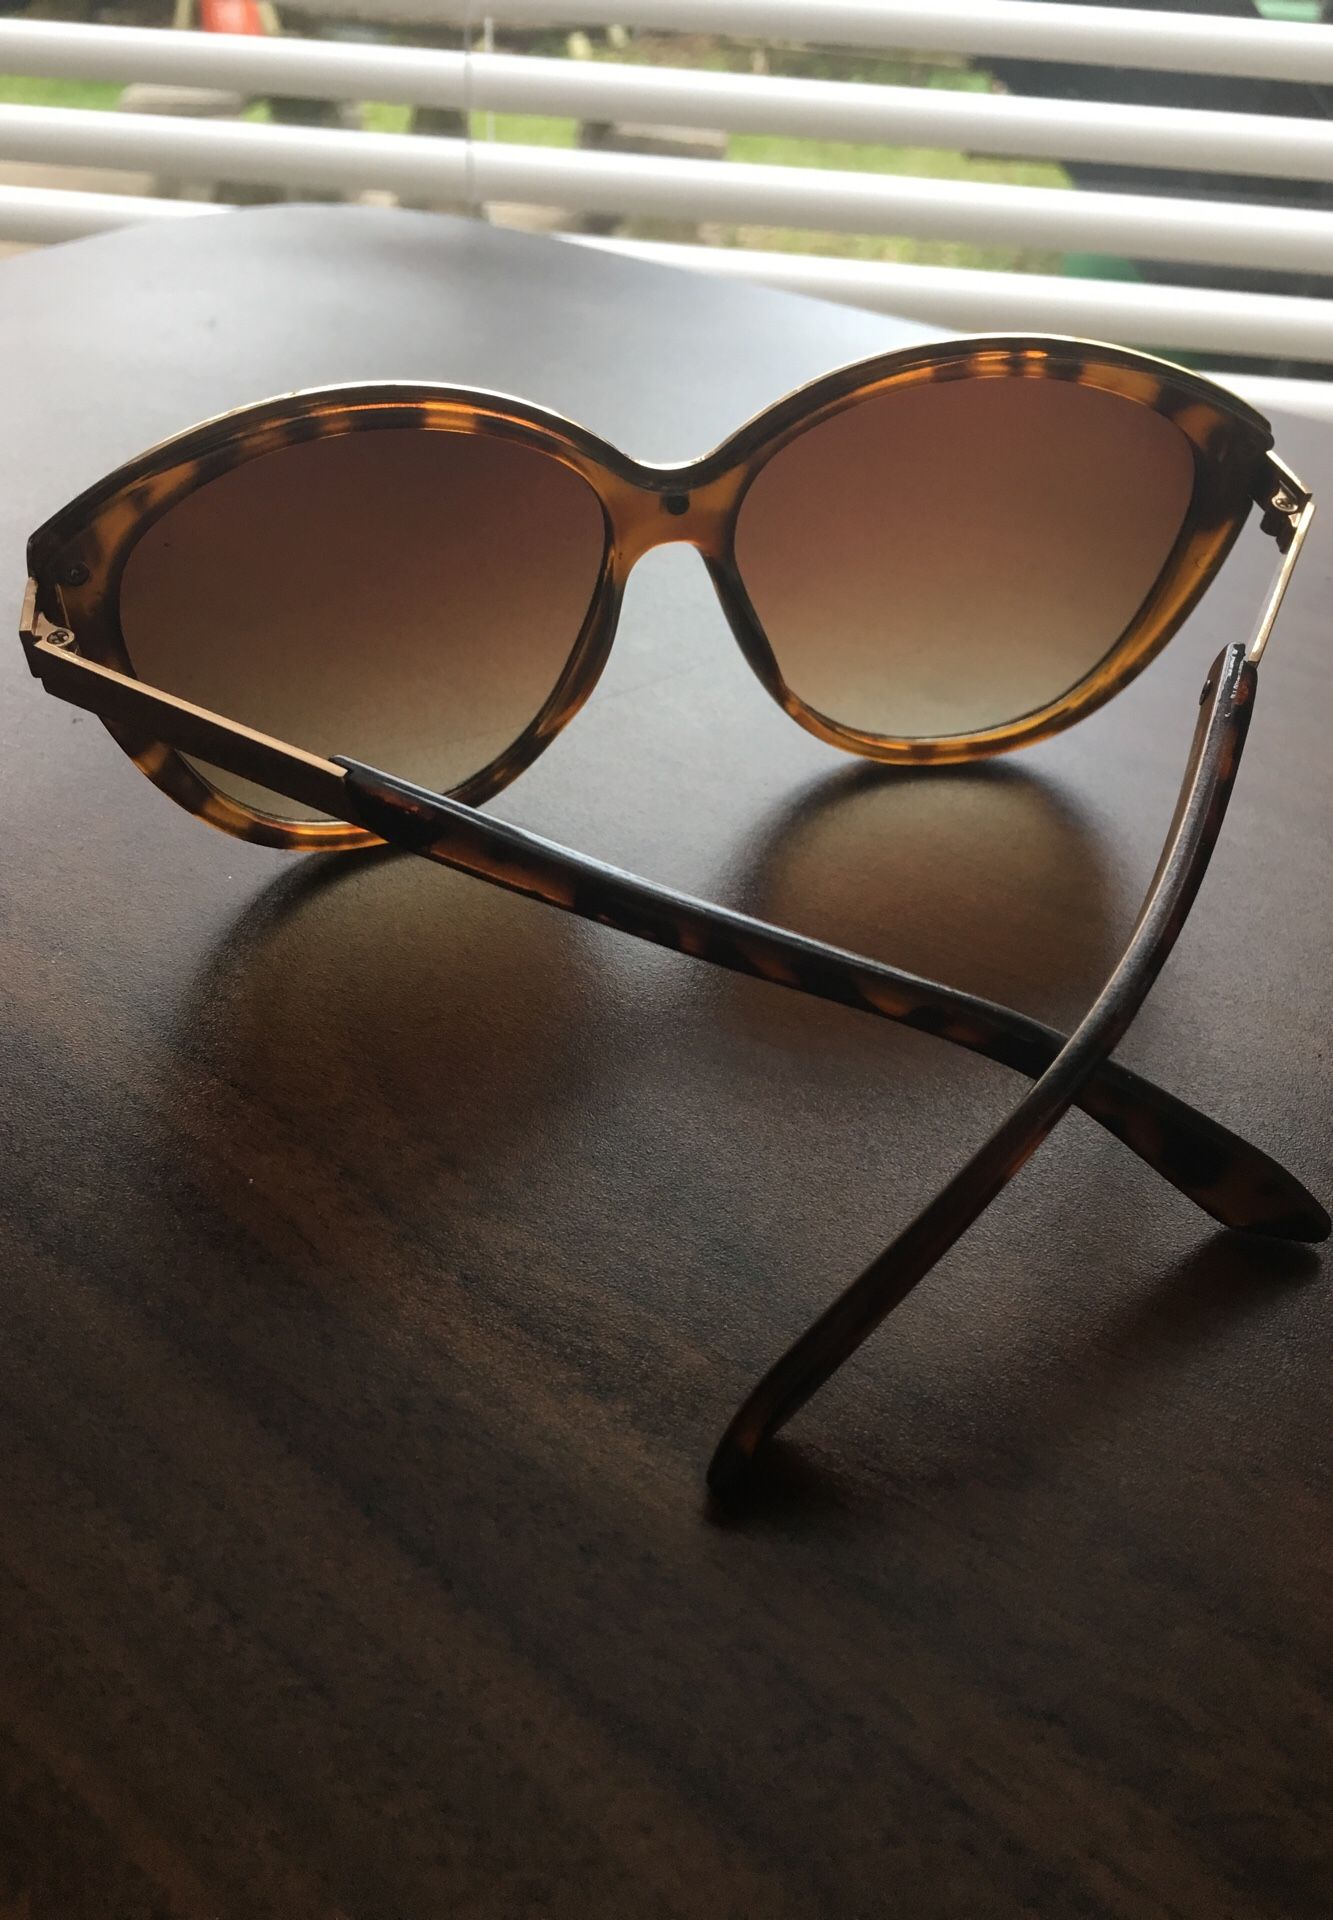 Ann Taylor Loft Tortoise Shell Sunglasses